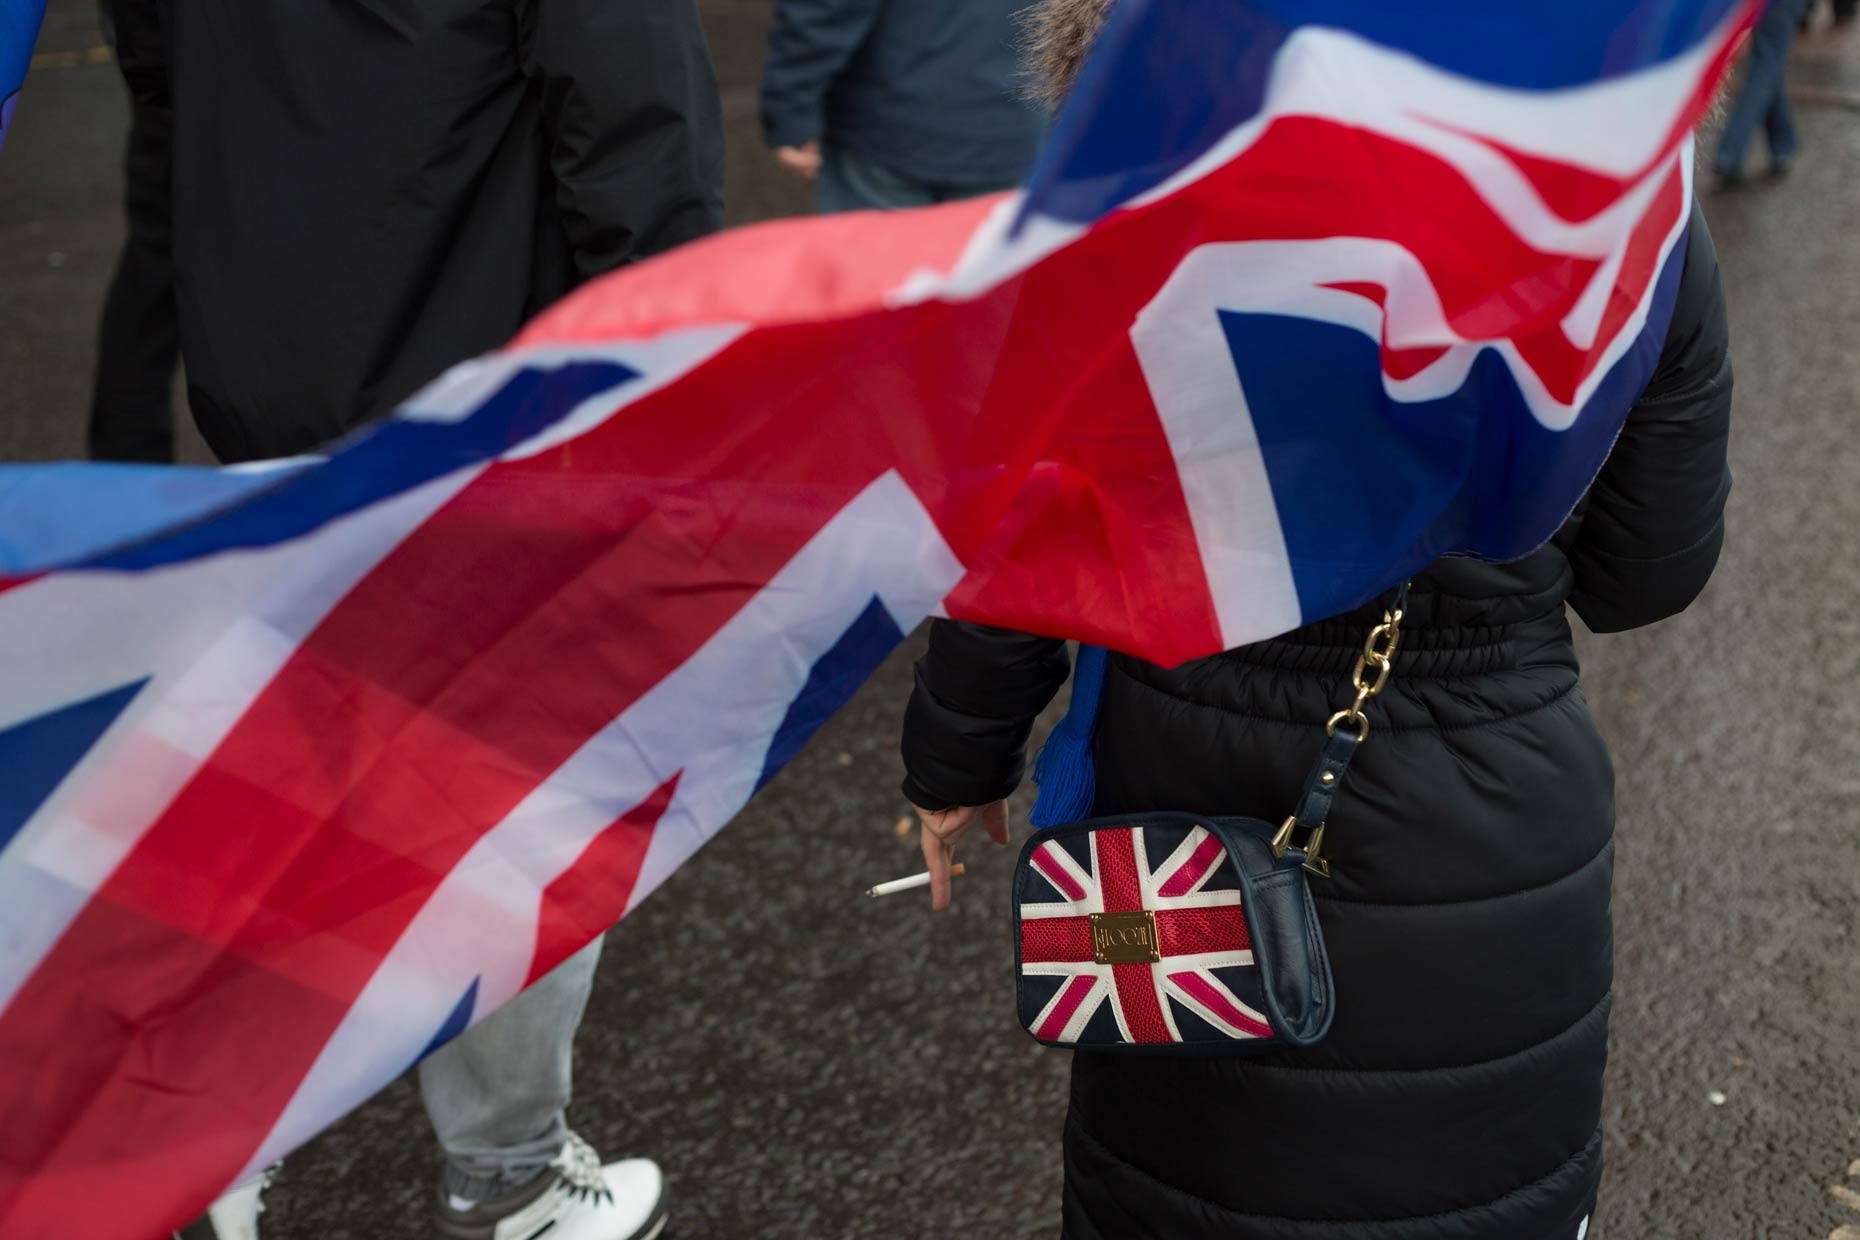 Union Jack flag and handbag purse, Scotland, by photographer Sutton-Hibbert